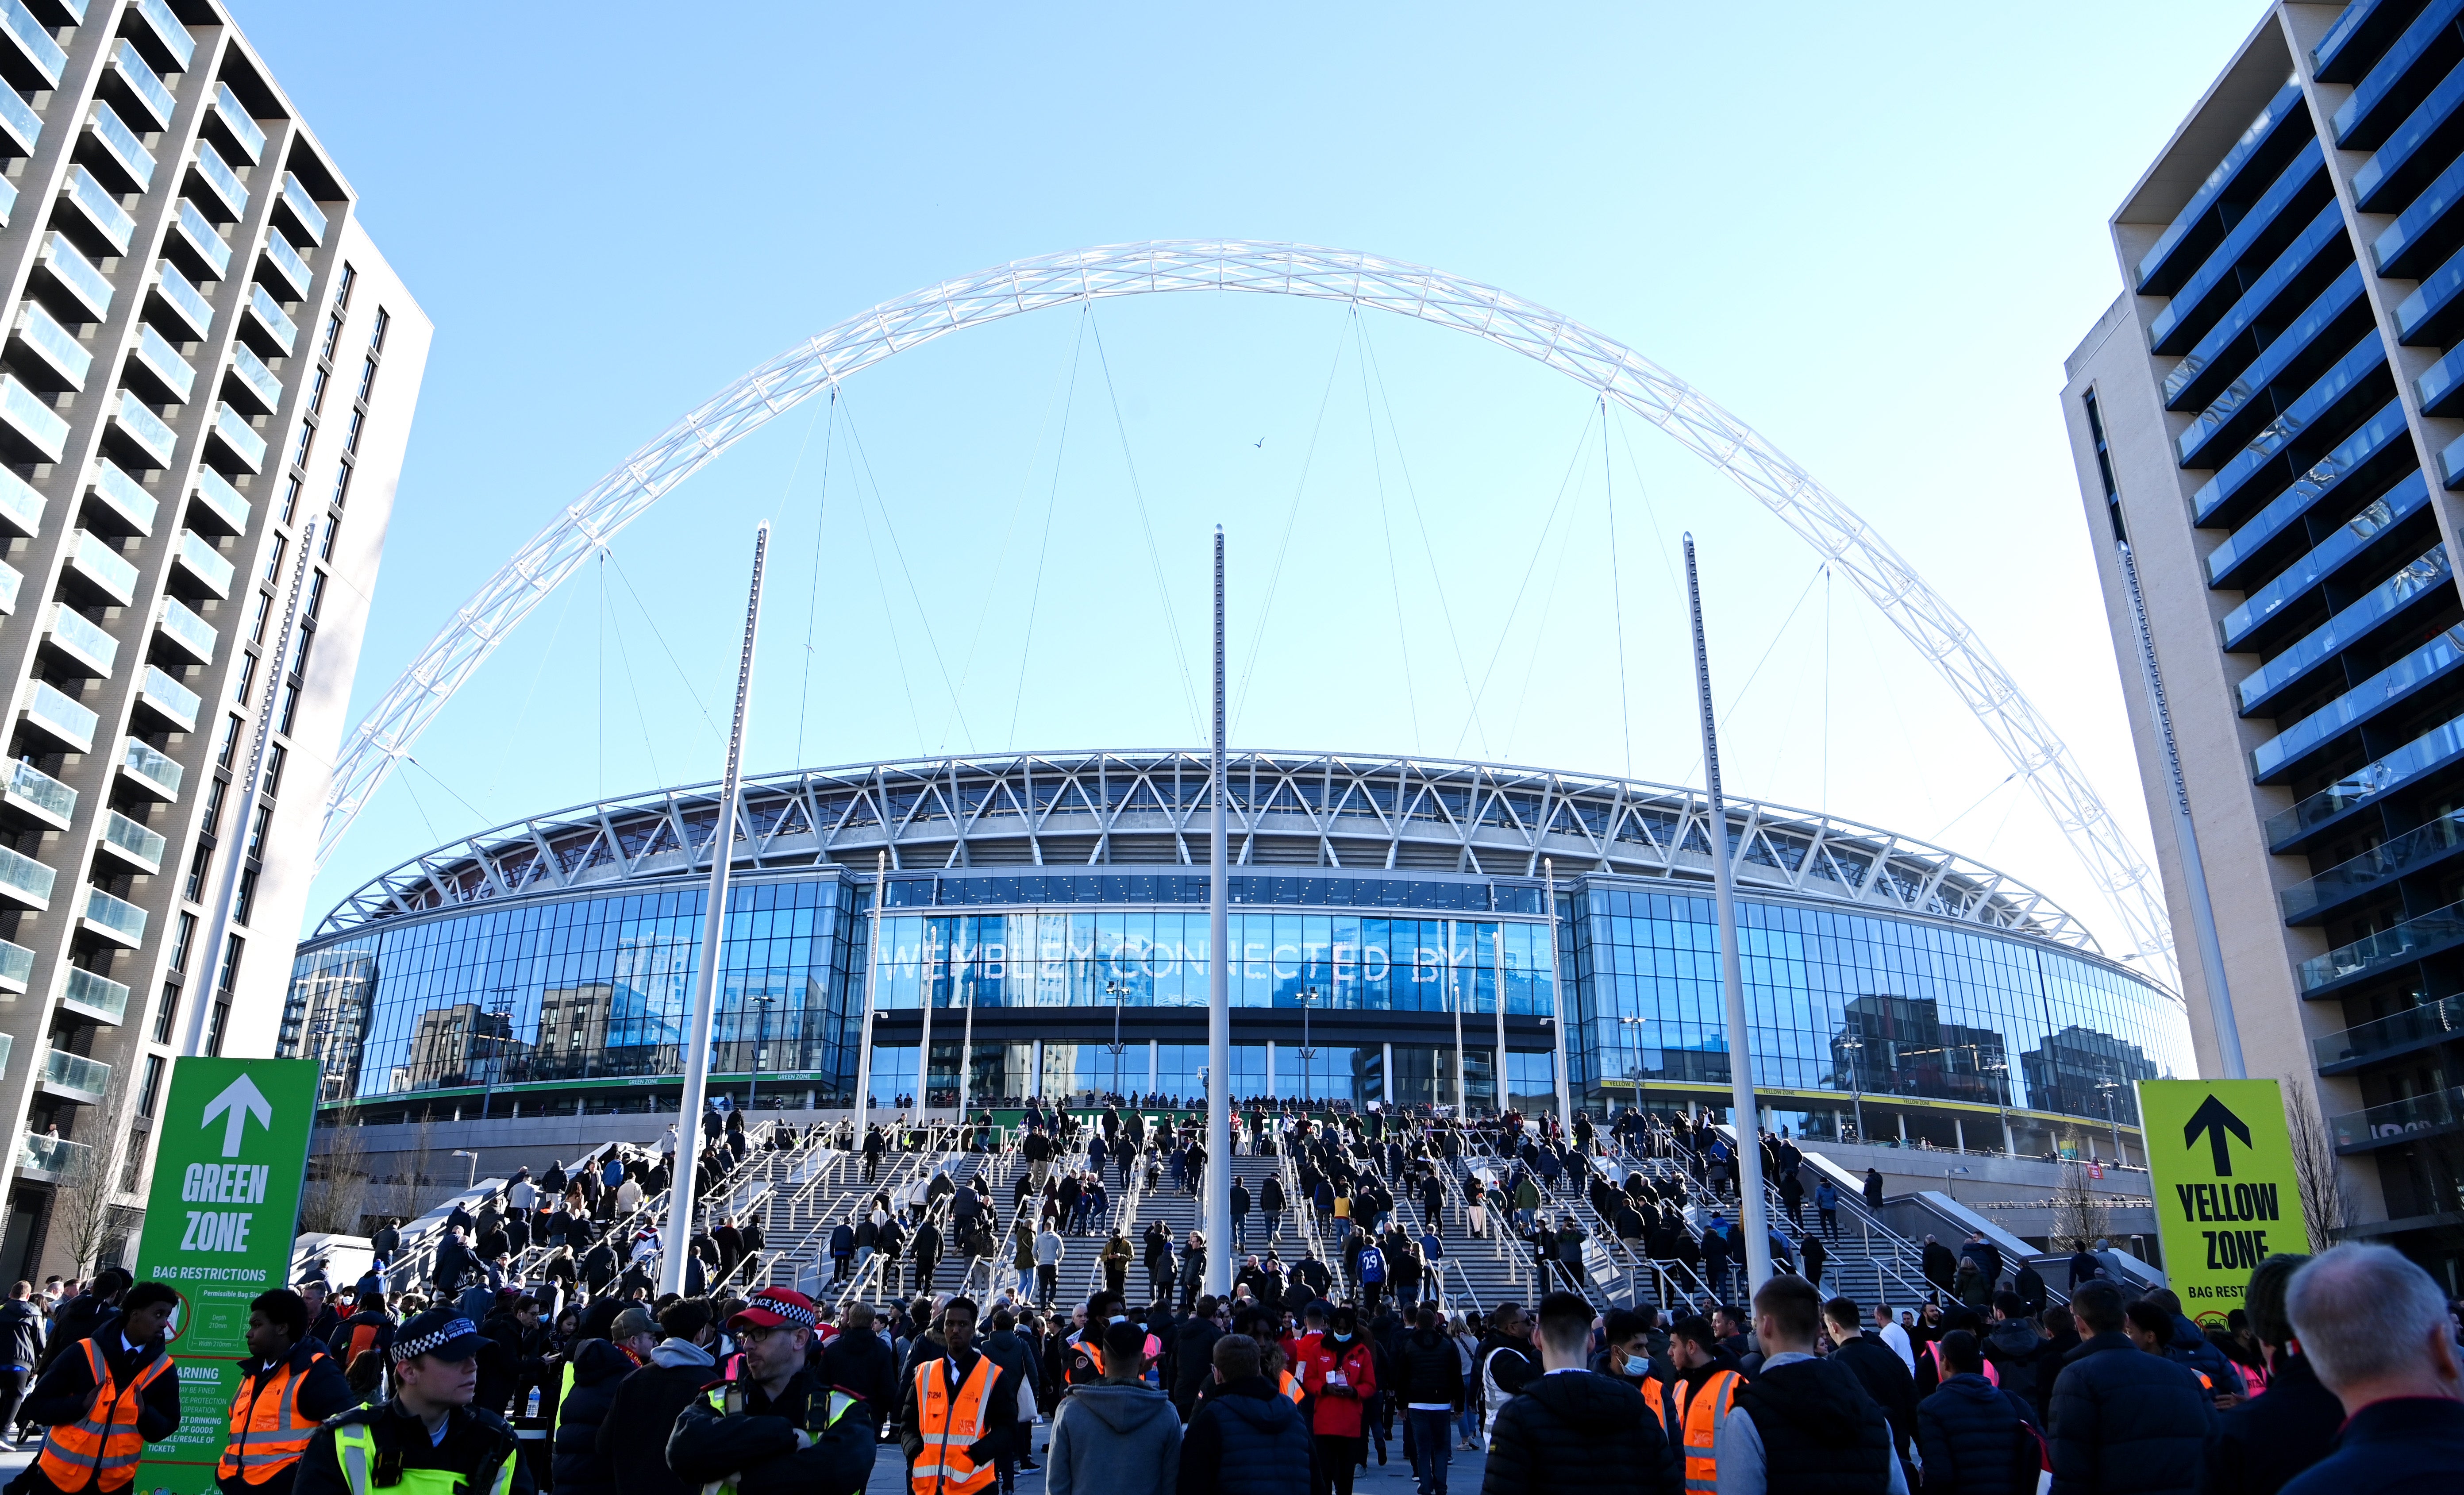 Wembley is set to host the FA Cup semi-finals